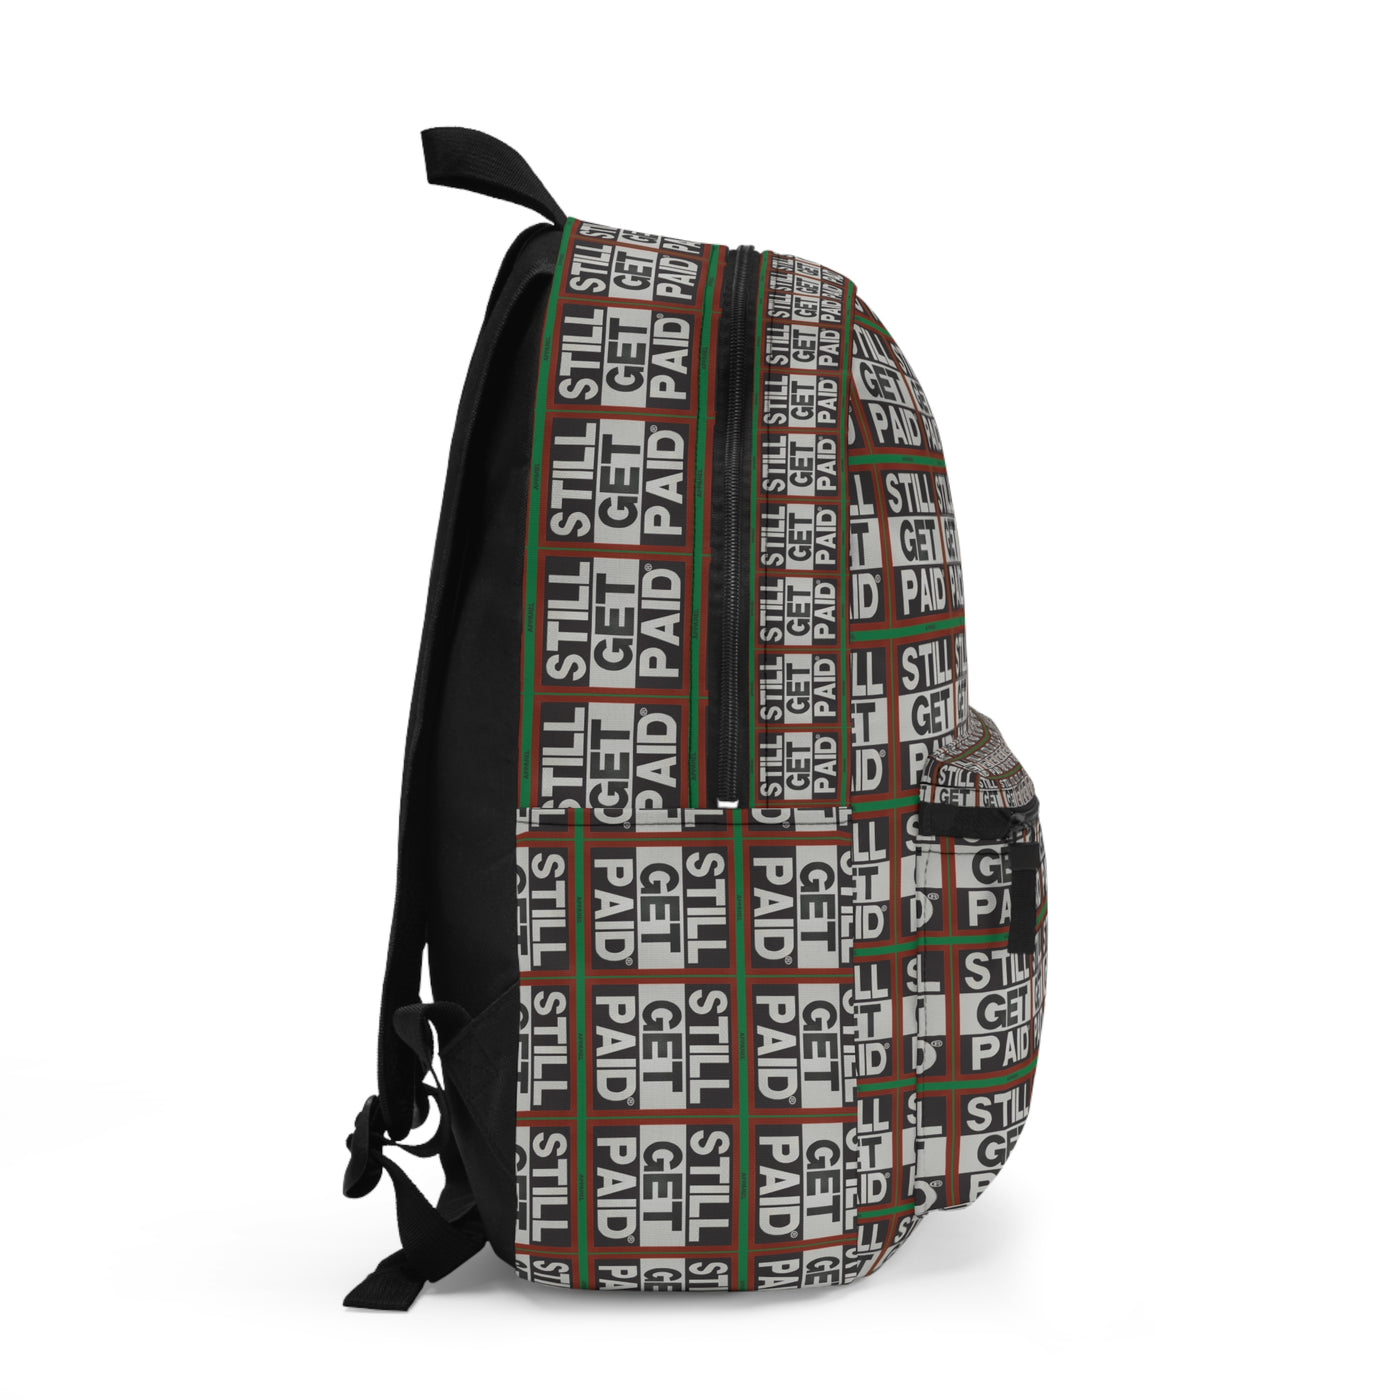 STILLGETPAID Backpack FULL PRINT